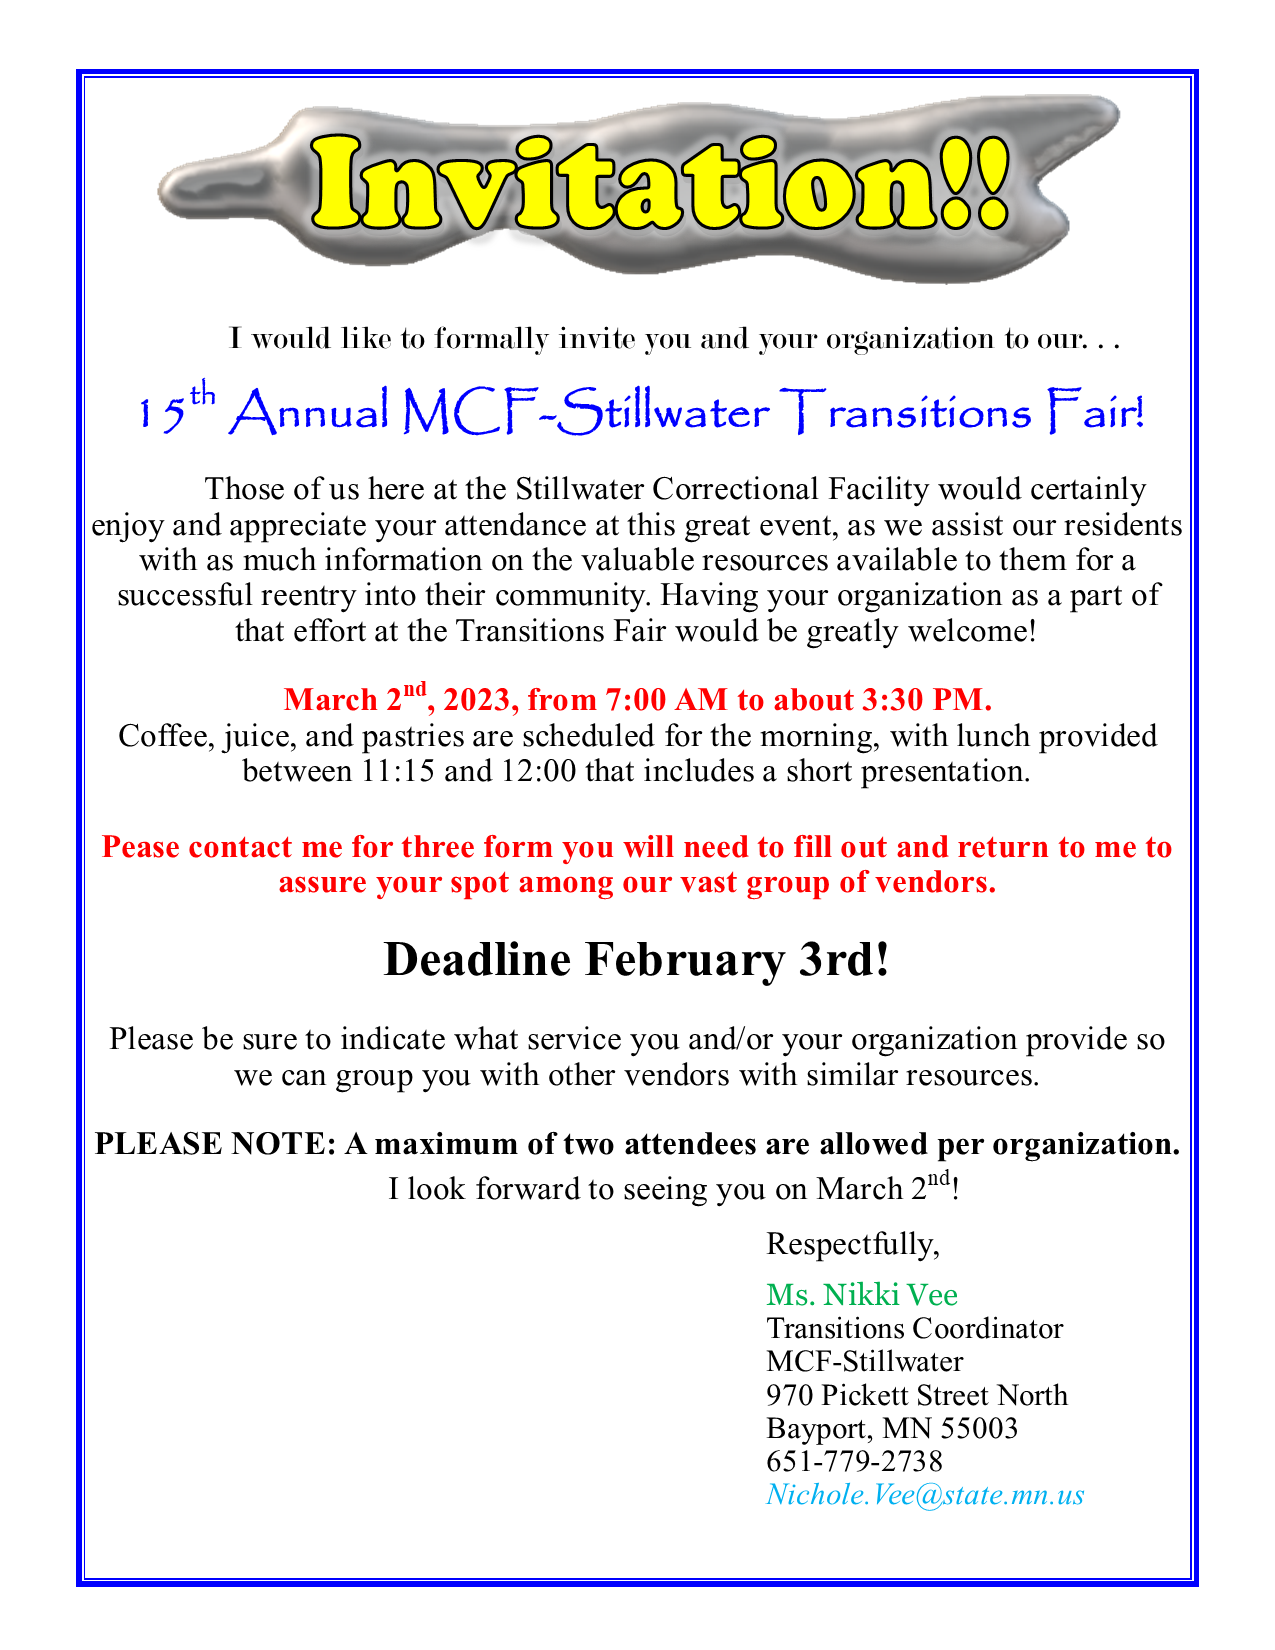 MCF Stillwater Transitions Fair